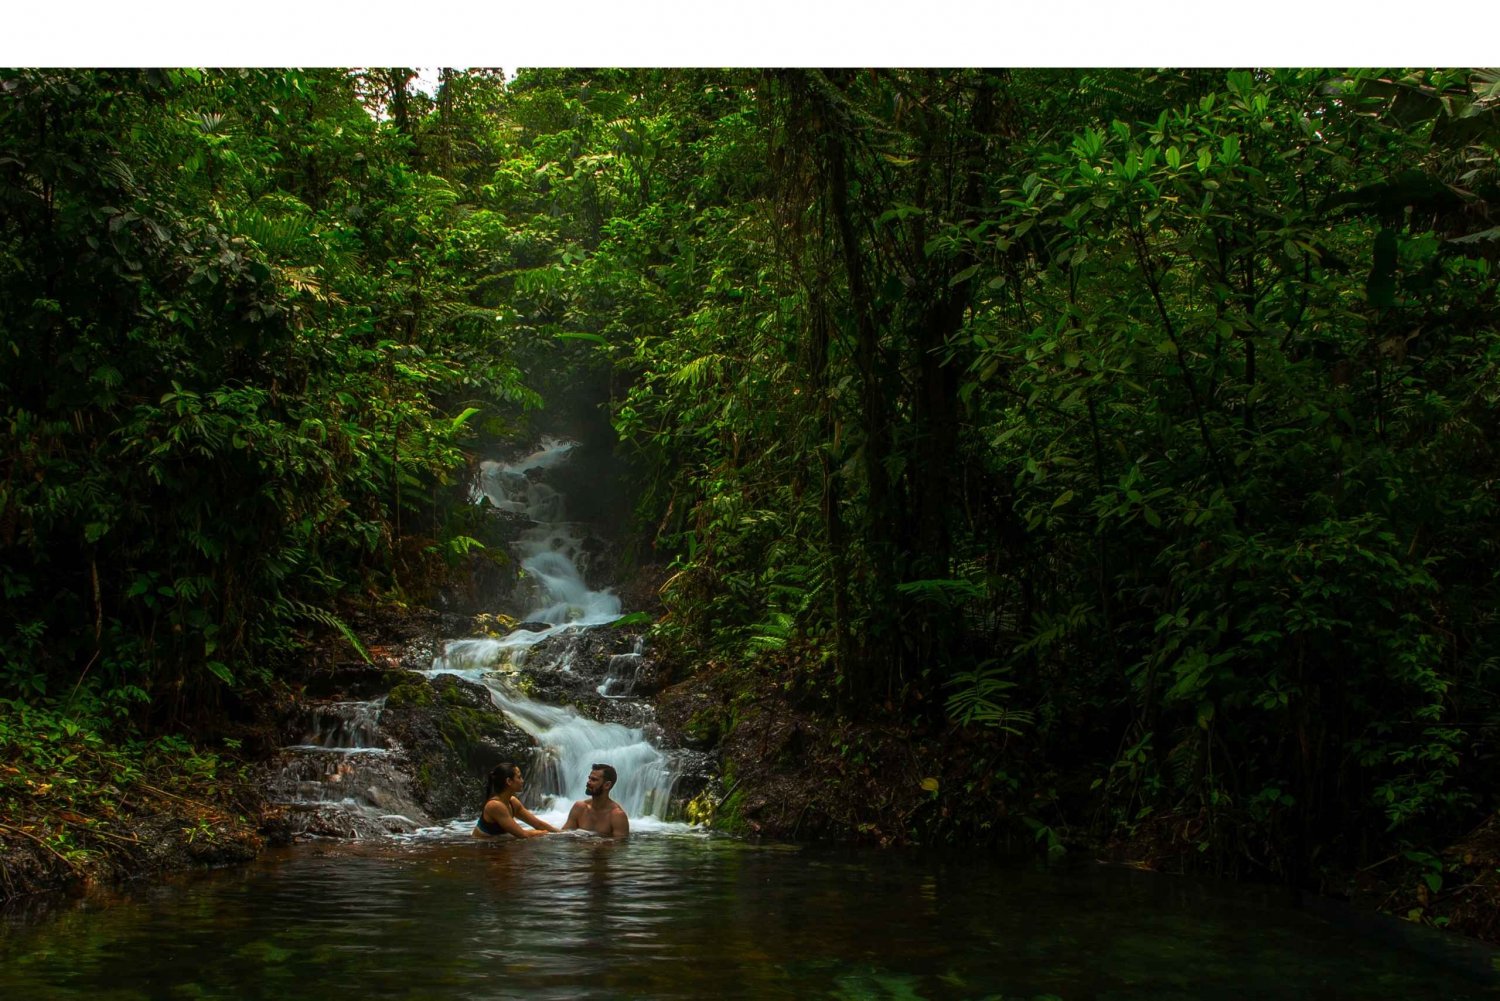 Guanacaste: Sensoria Rainforest Walking and Thermals Tour